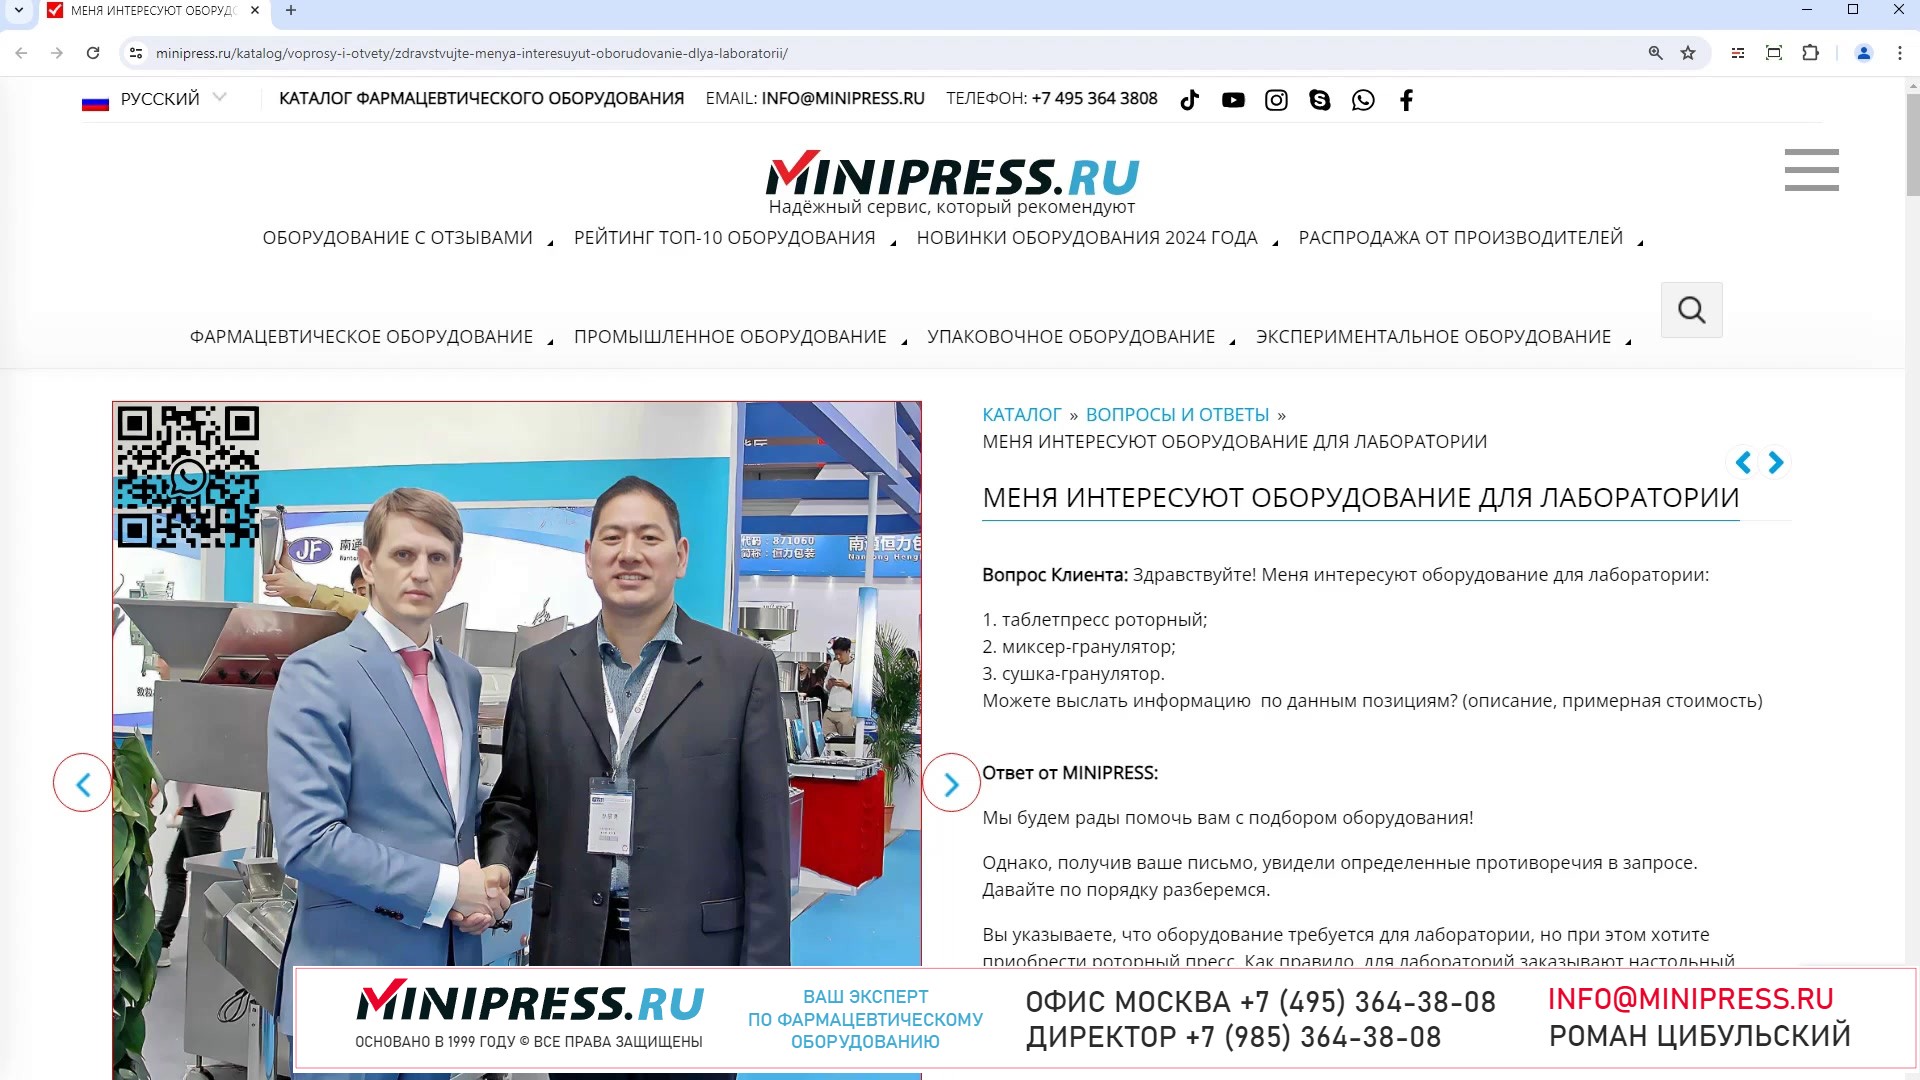 Minipress.ru Меня интересуют оборудование для лаборатории